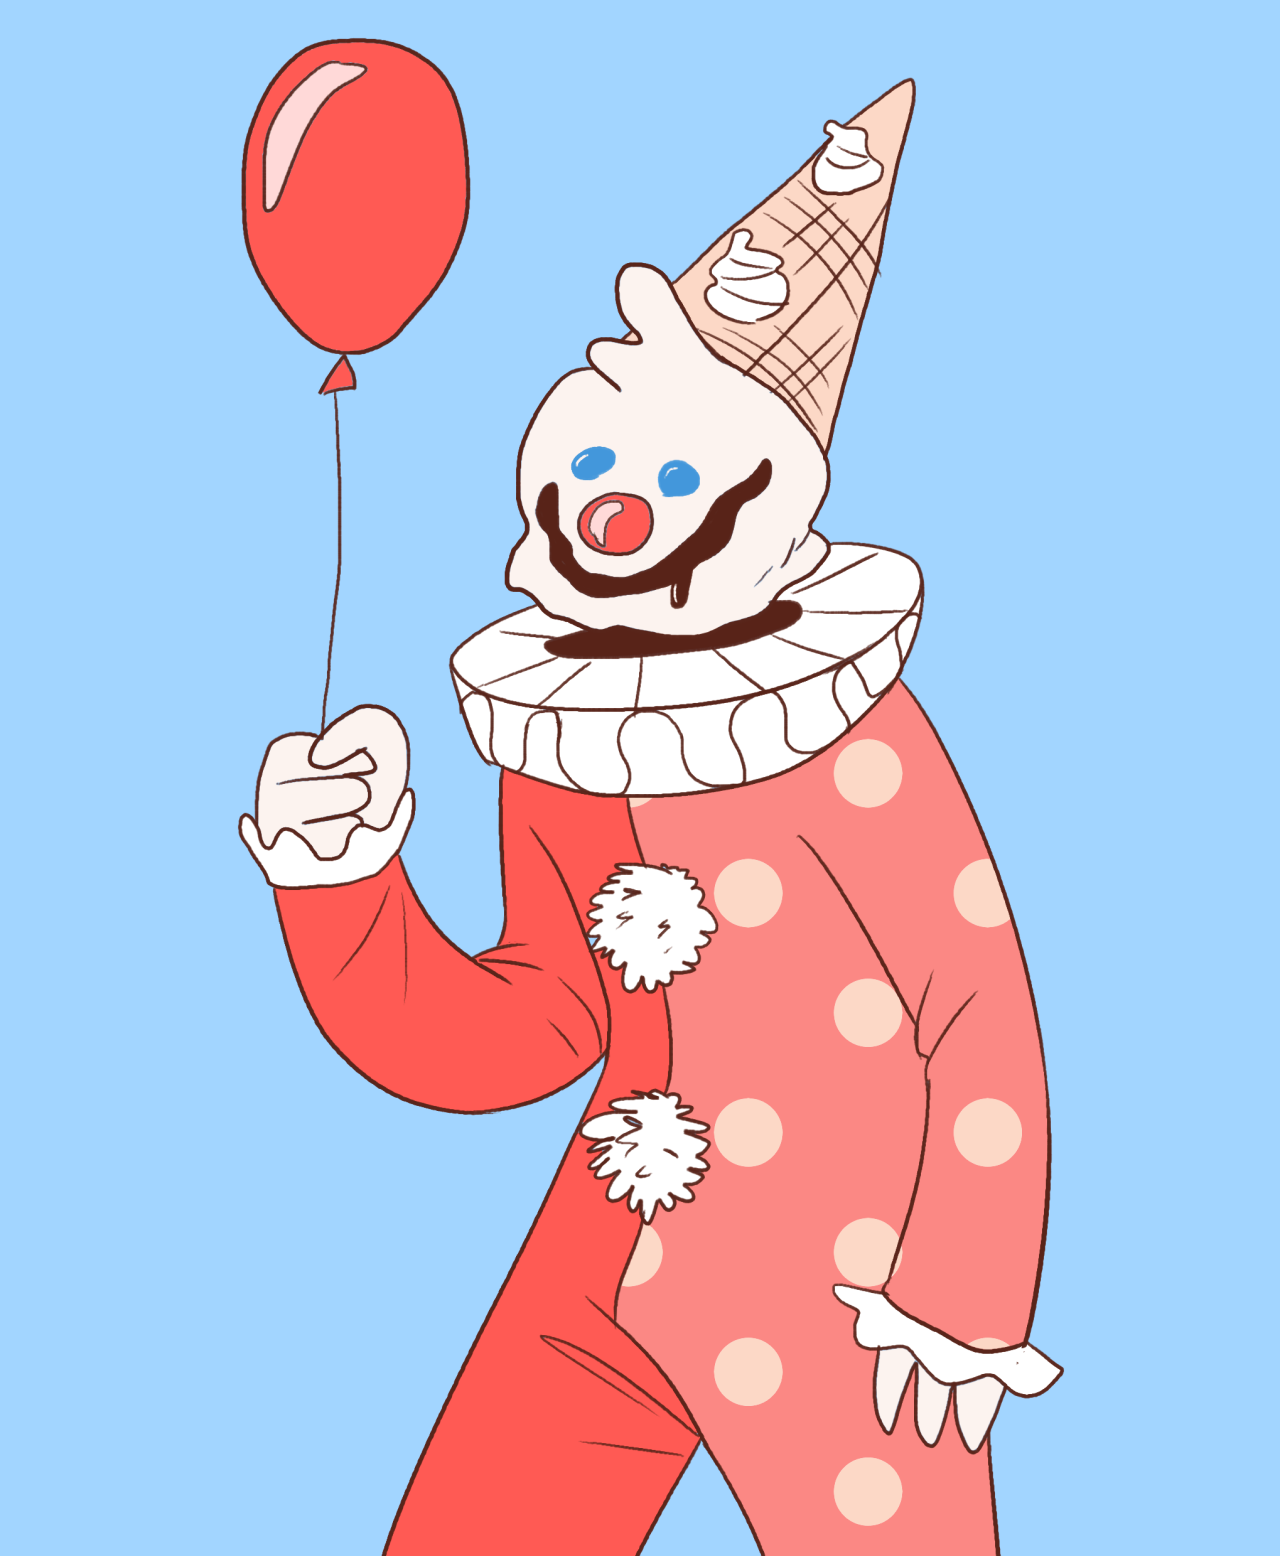 clowncore. Character art, Character design, Cute clown